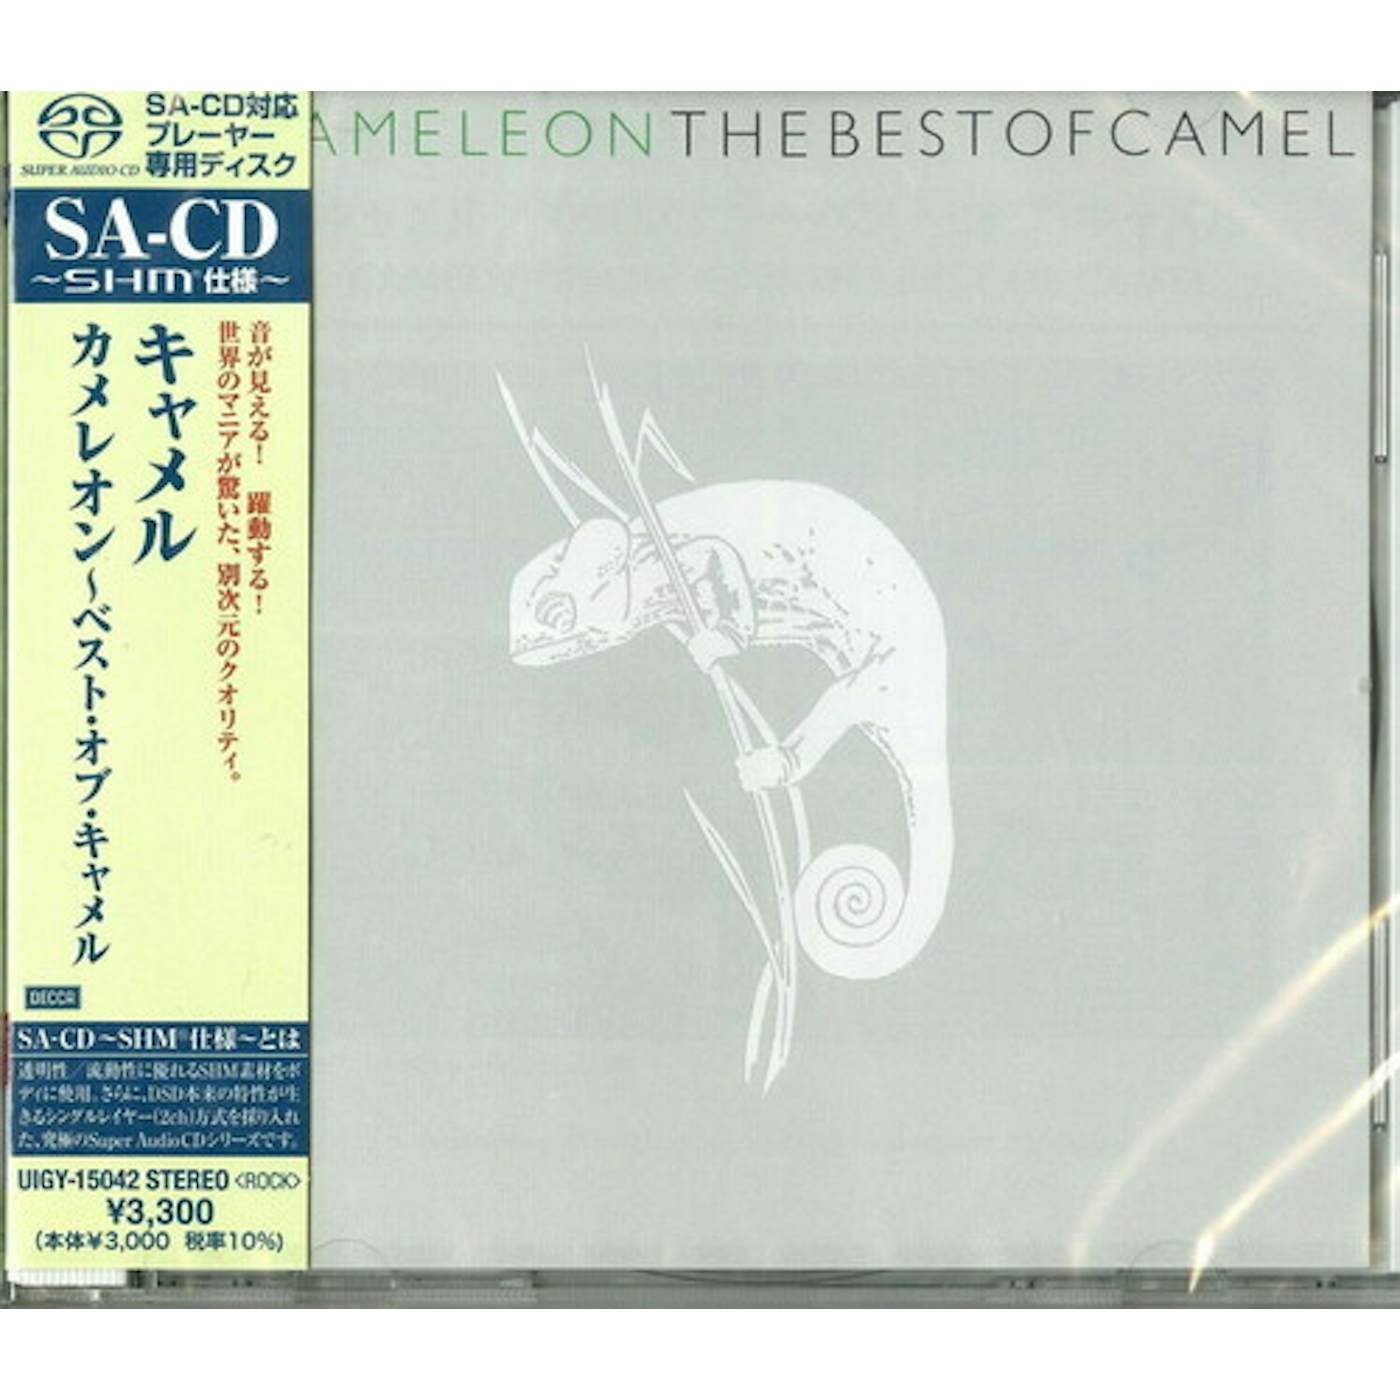 CHAMELEON THE BEST OF CAMEL Super Audio CD